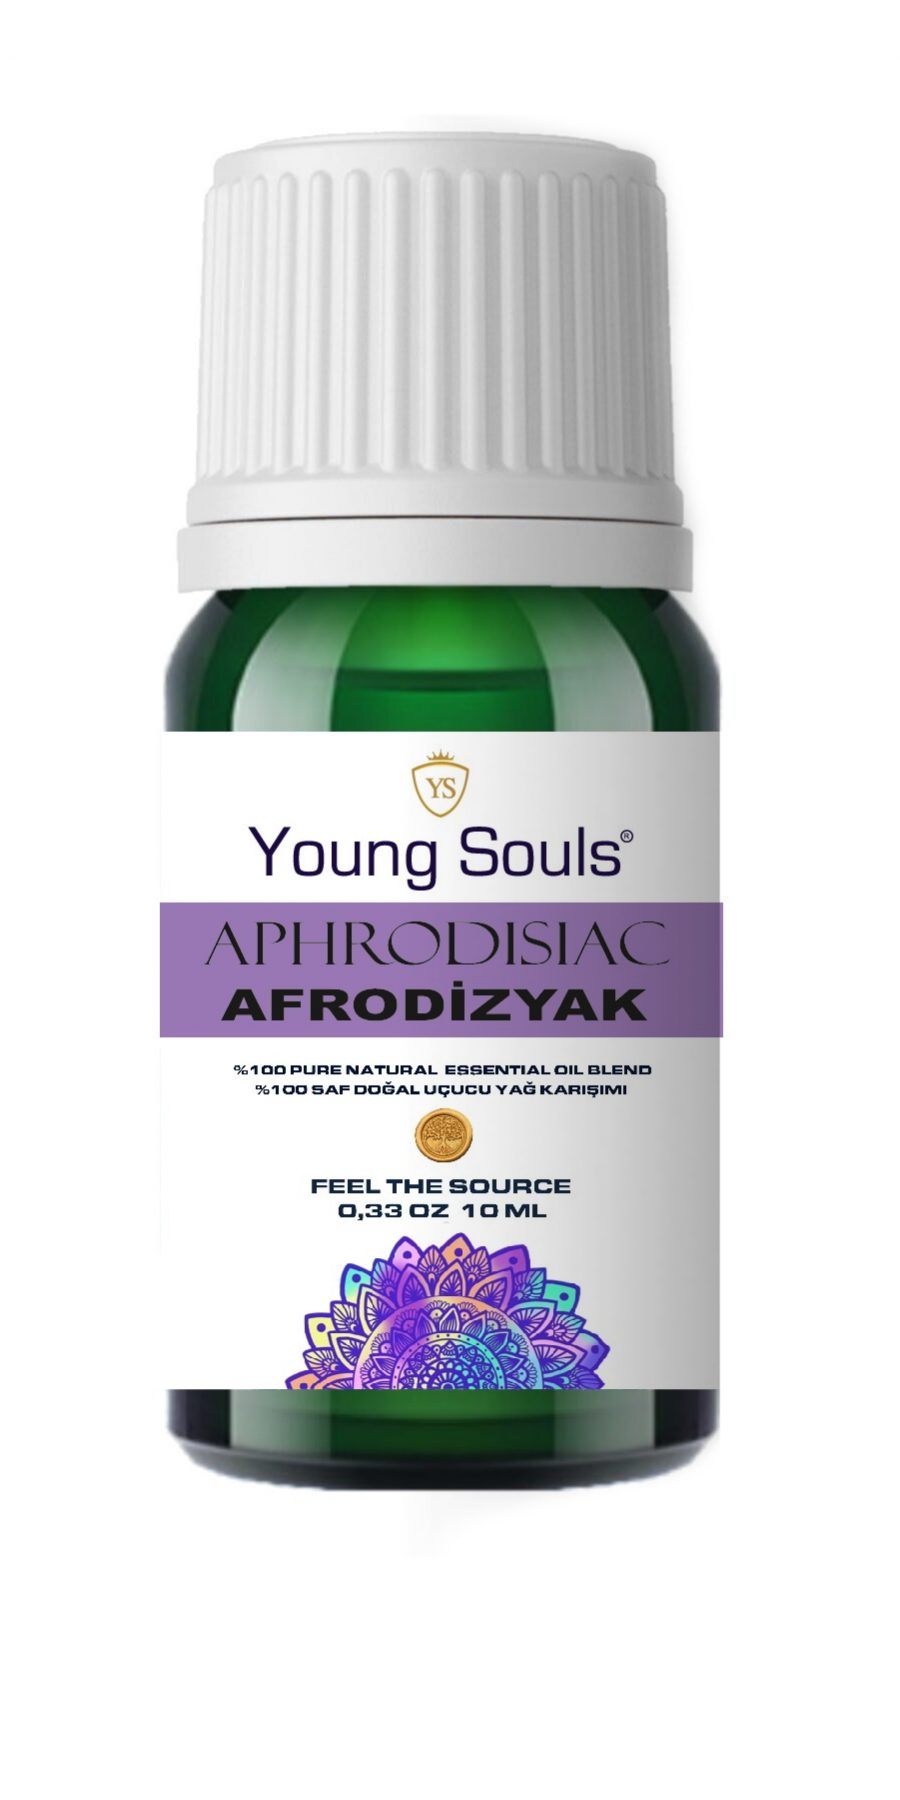 Young Souls Aromaterapi Aphrodisiac Afrodizyak Uçucu Yağ Karışımı %100 Pure 10 ml